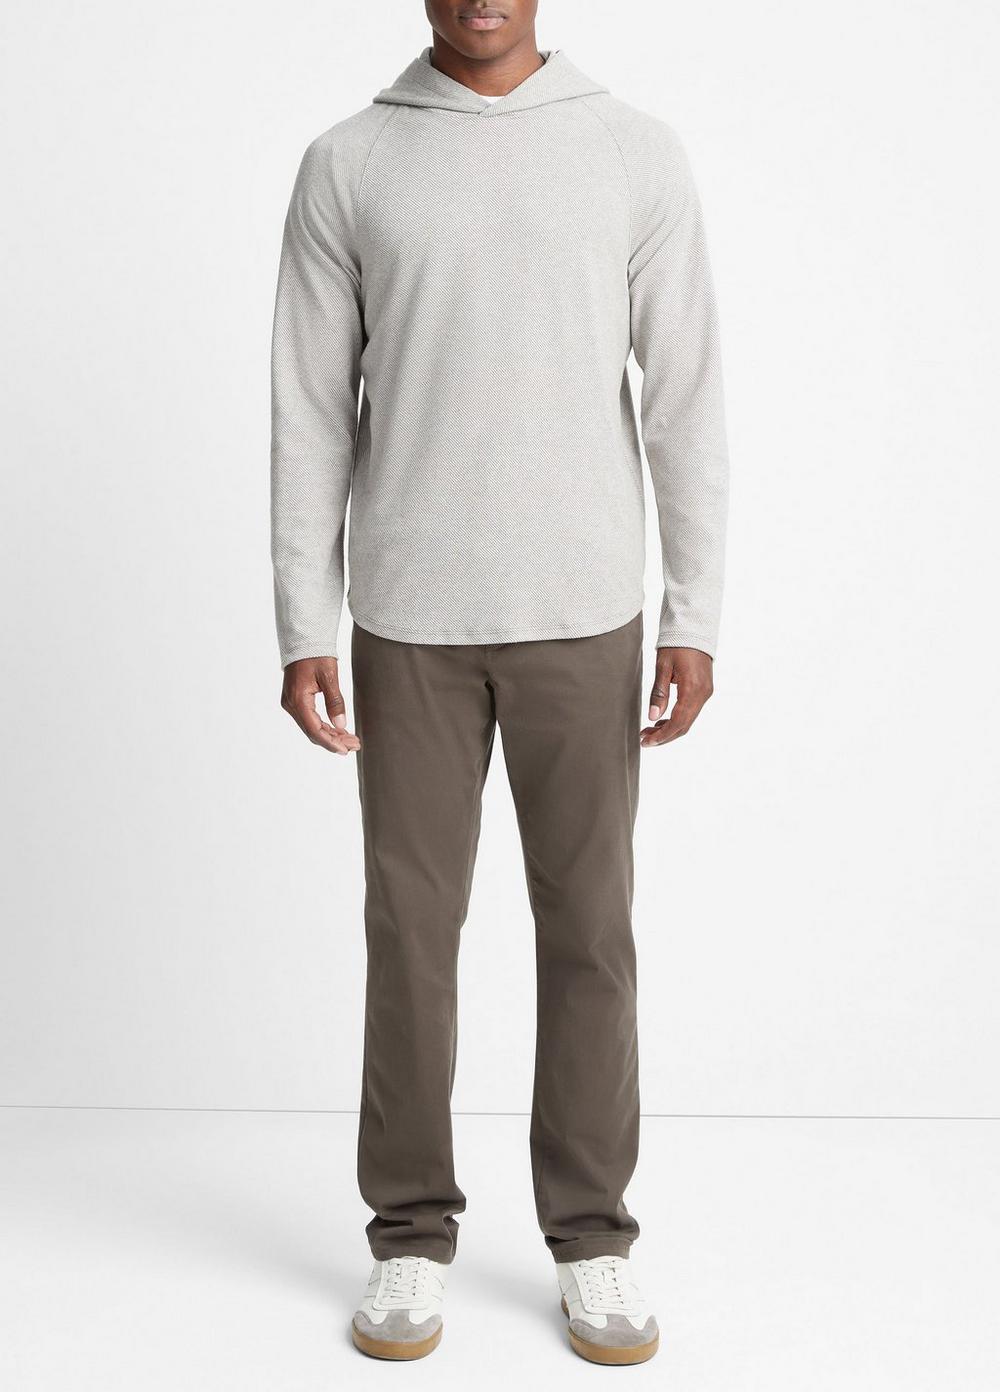 broken twill pullover hoodie, heather grey/off white, size m vince